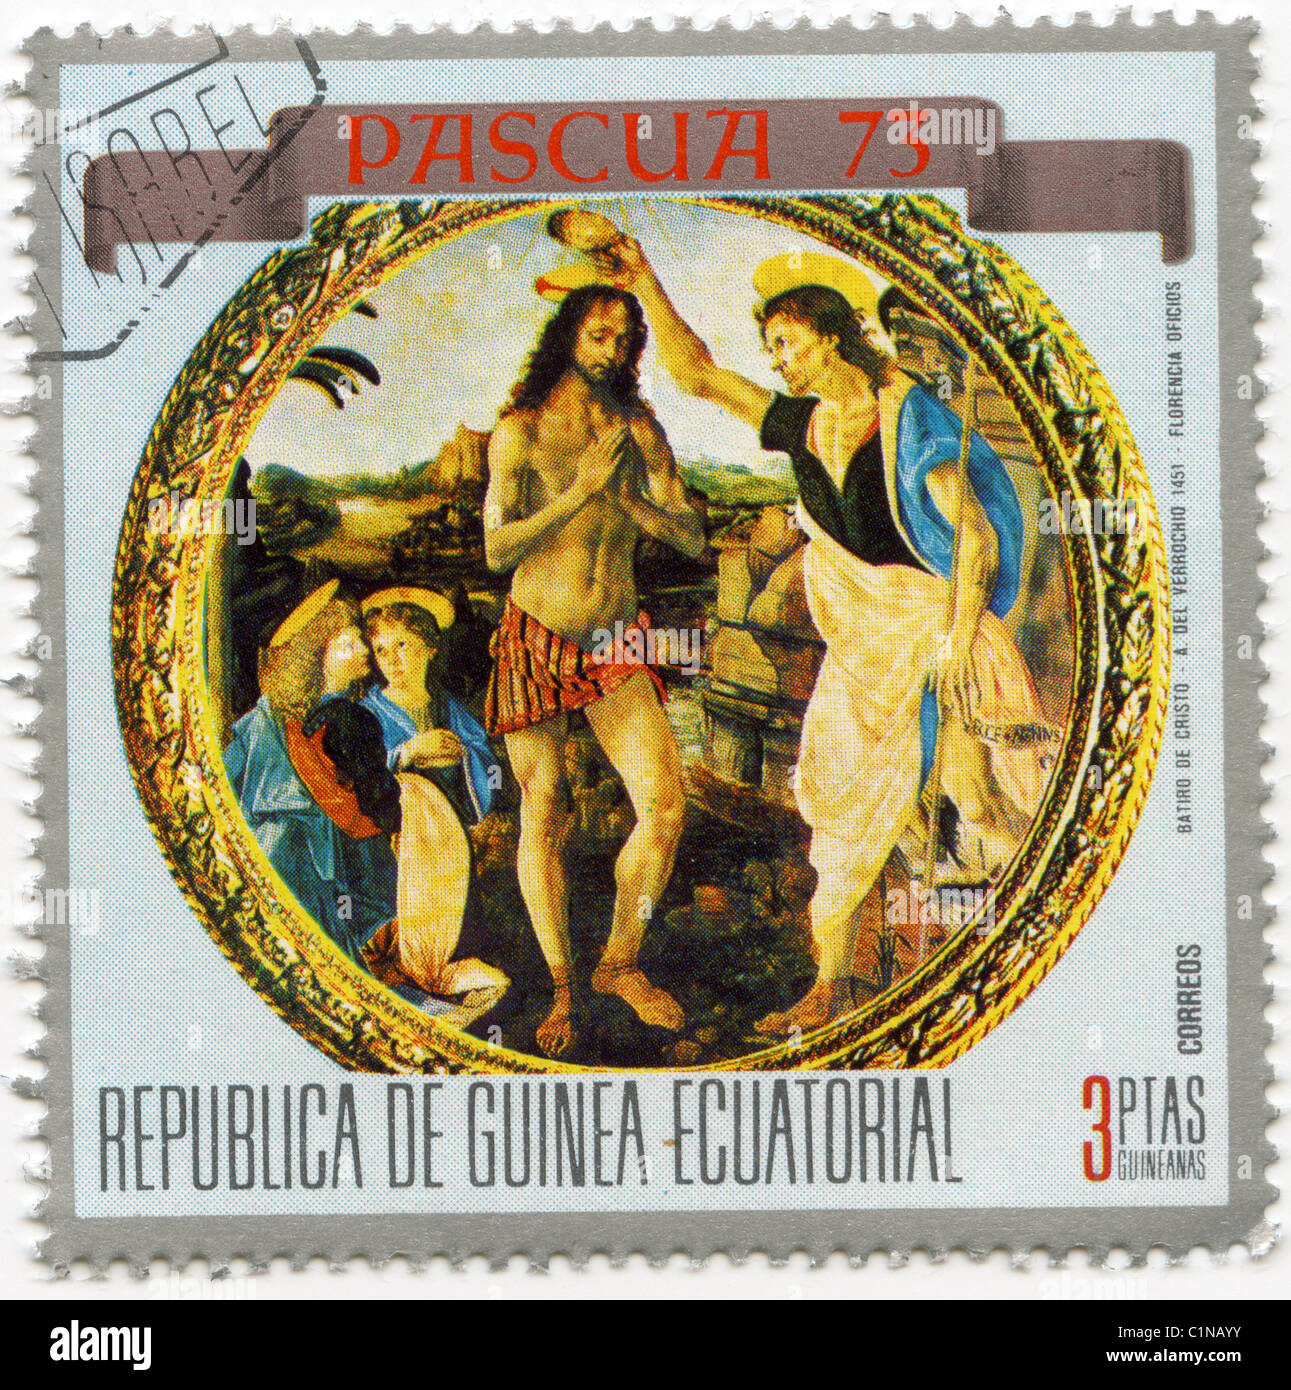 Equatorial Guinea postage stamp Stock Photo